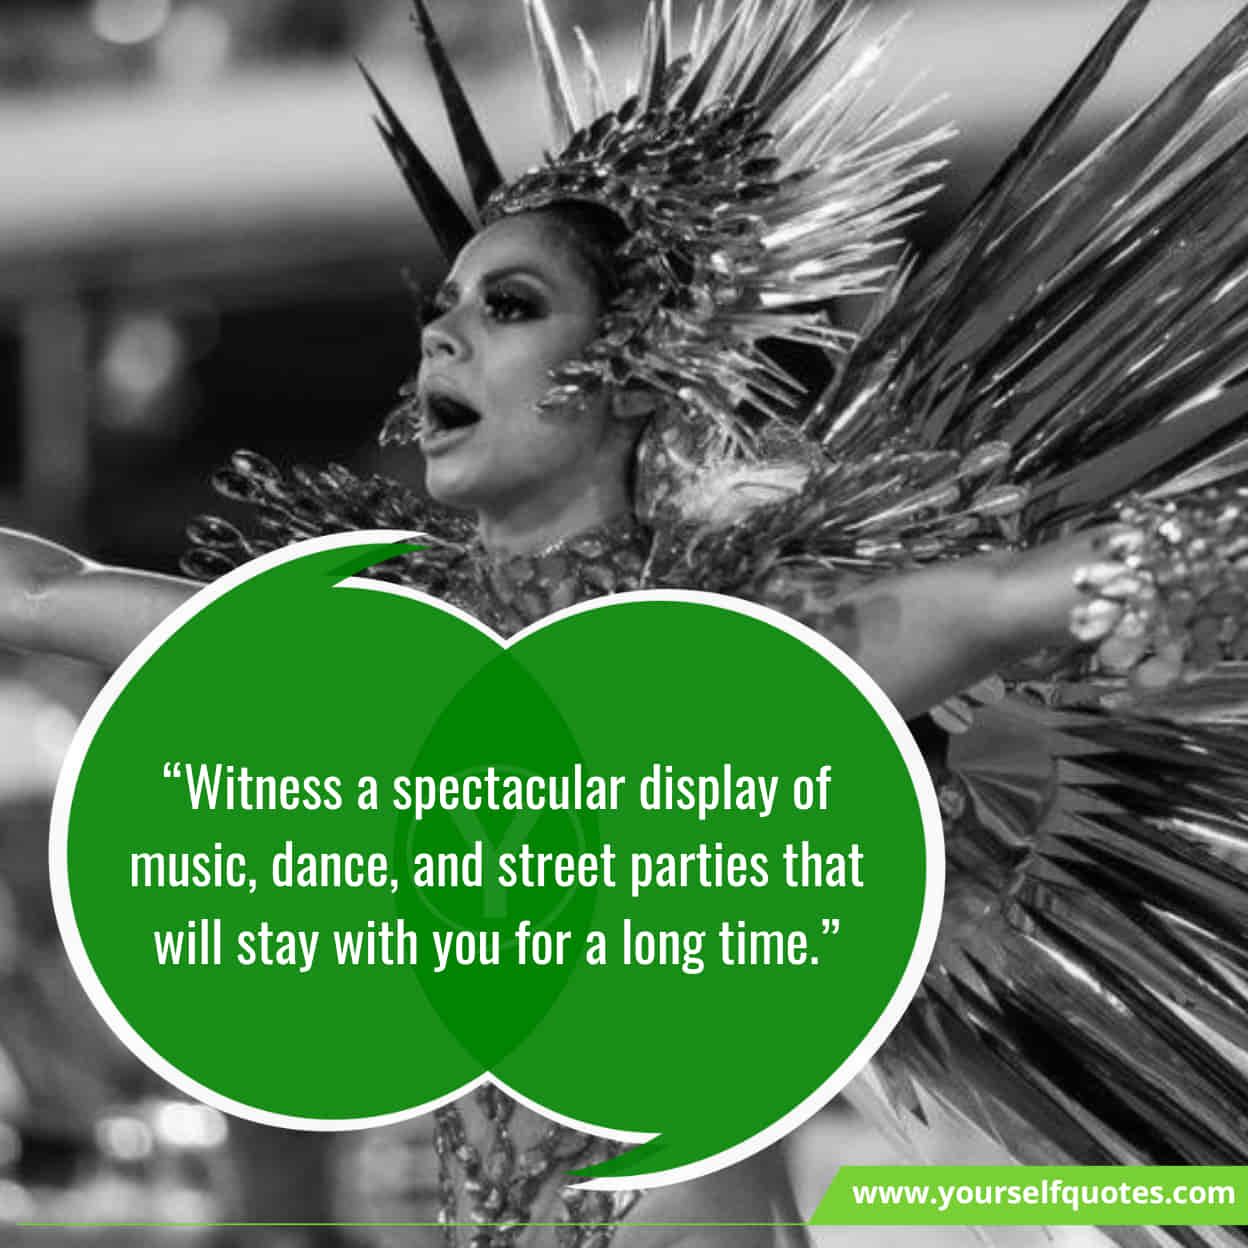 Best Rio de Janeiro Carnival Quotes